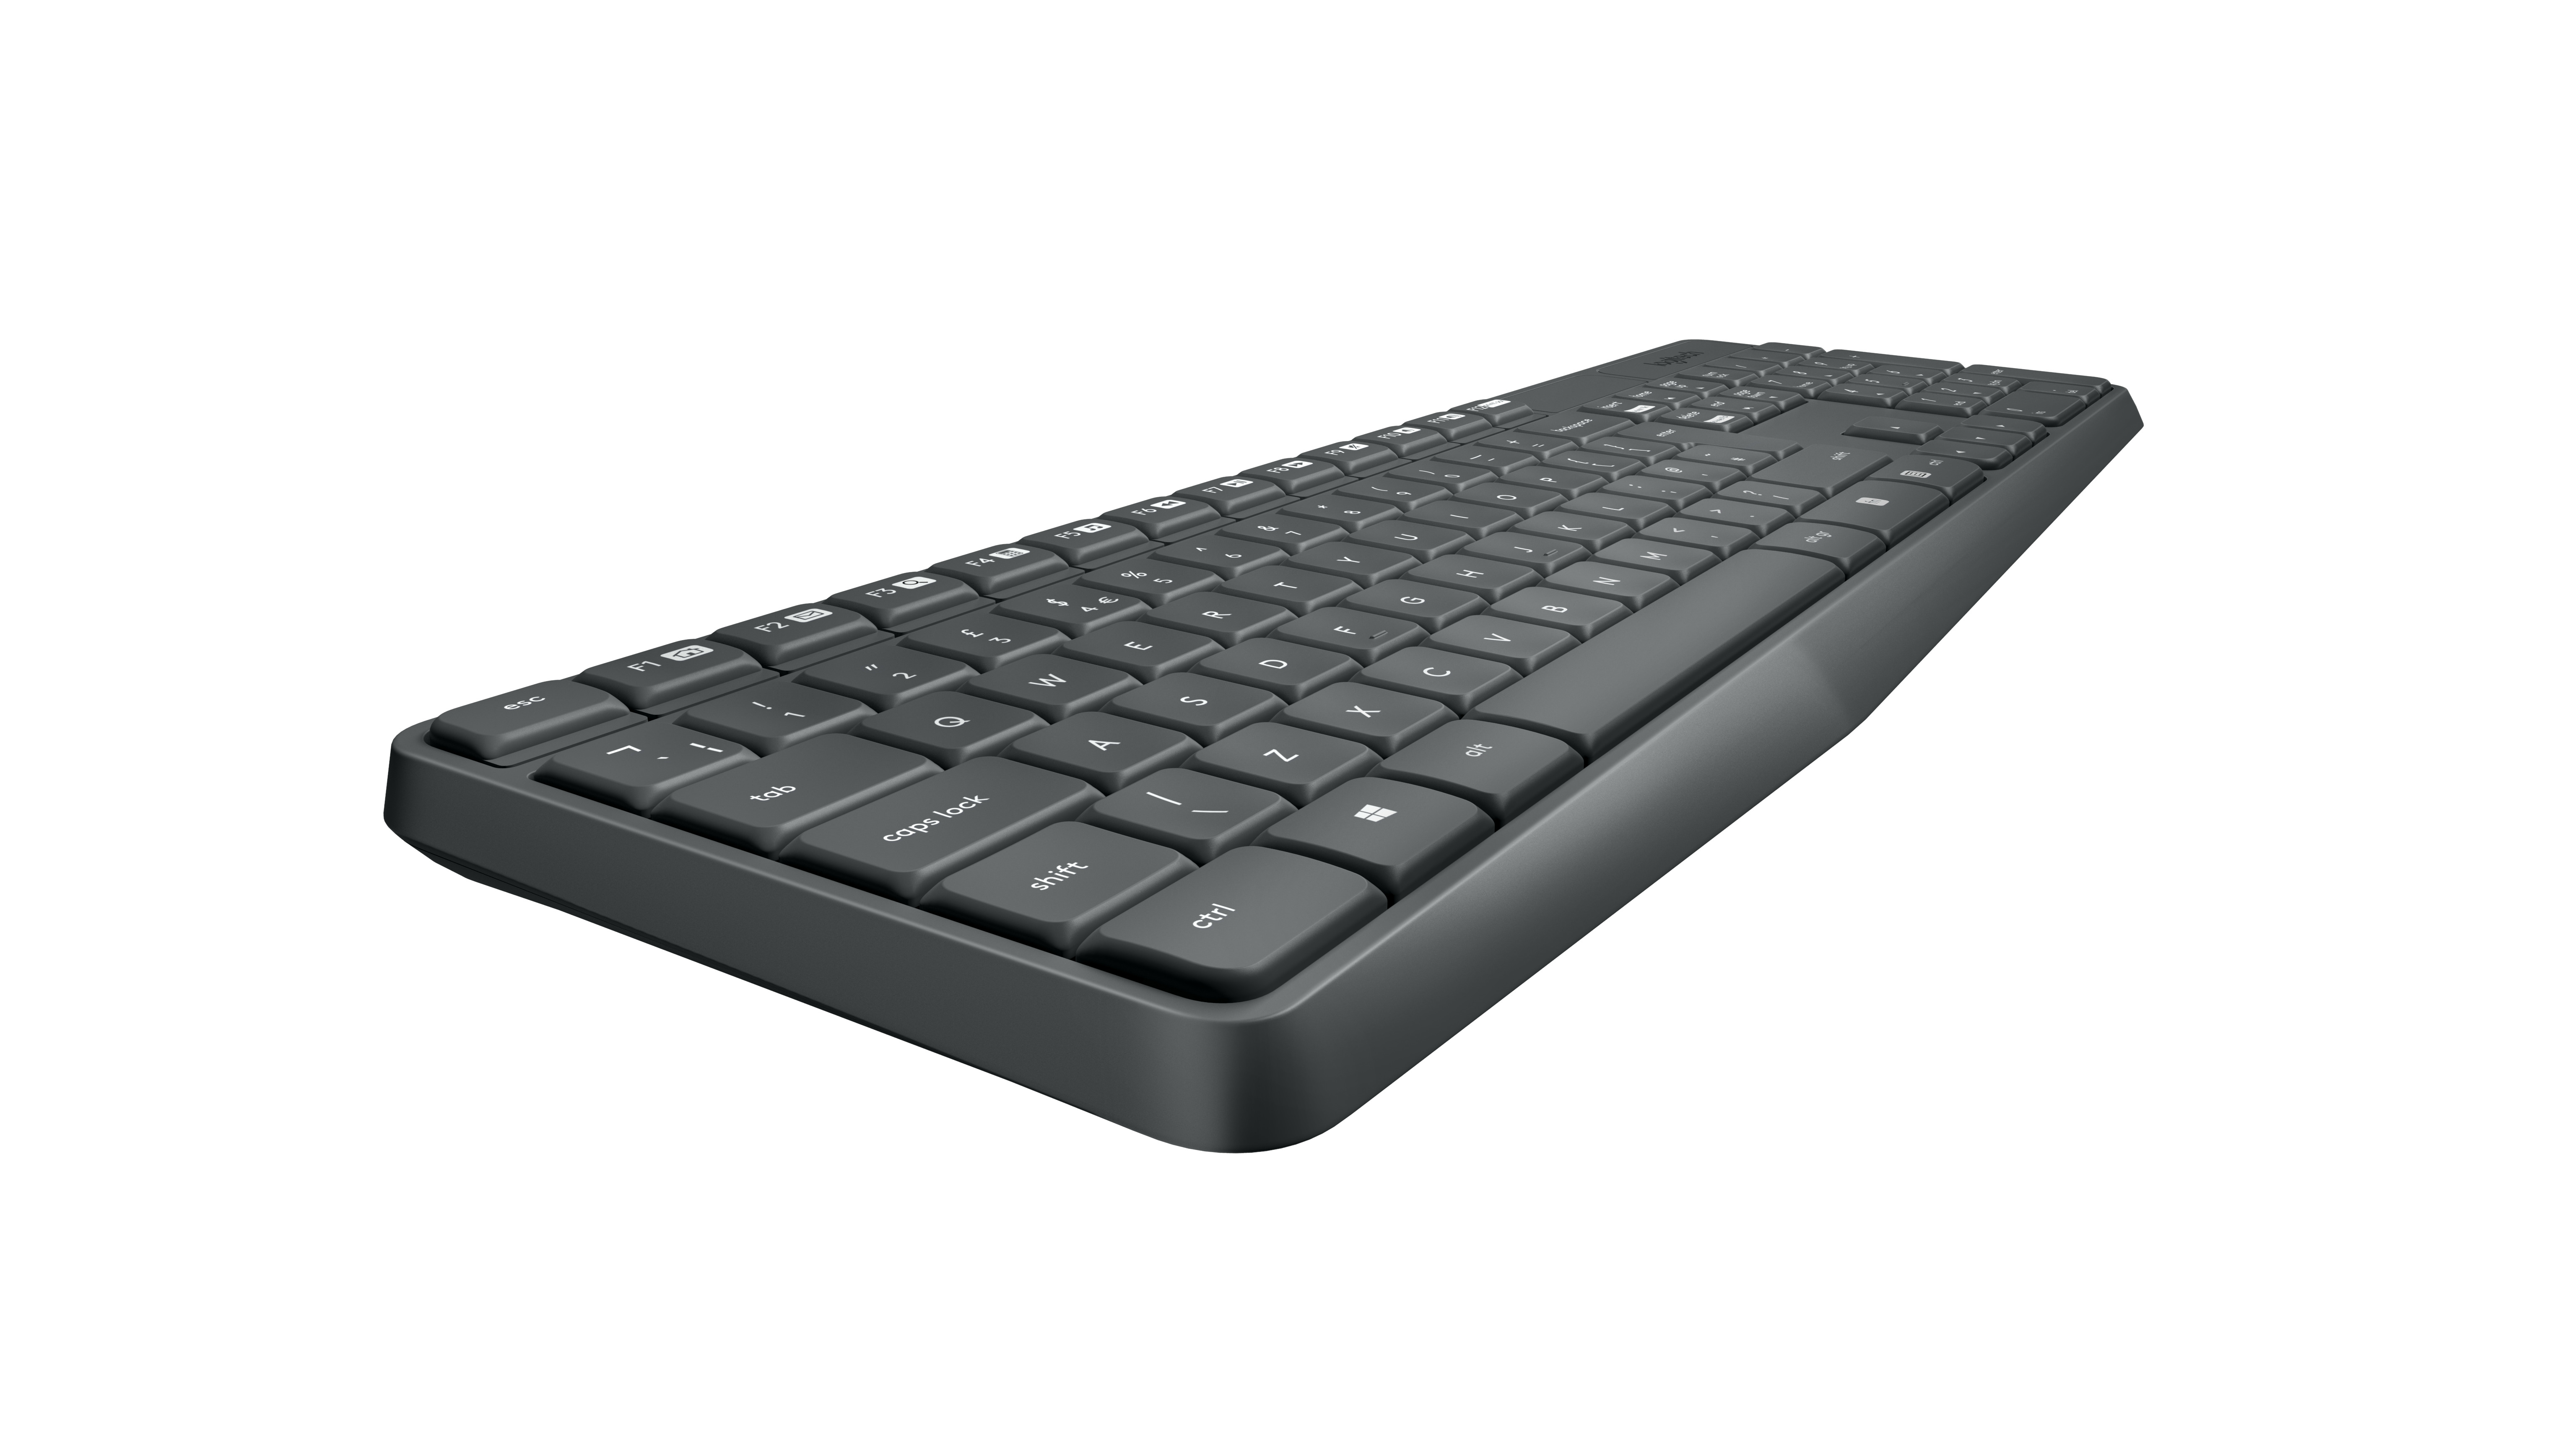 Logitech MK235 Tastatur Maus enthalten USB QWERTY US International Grau